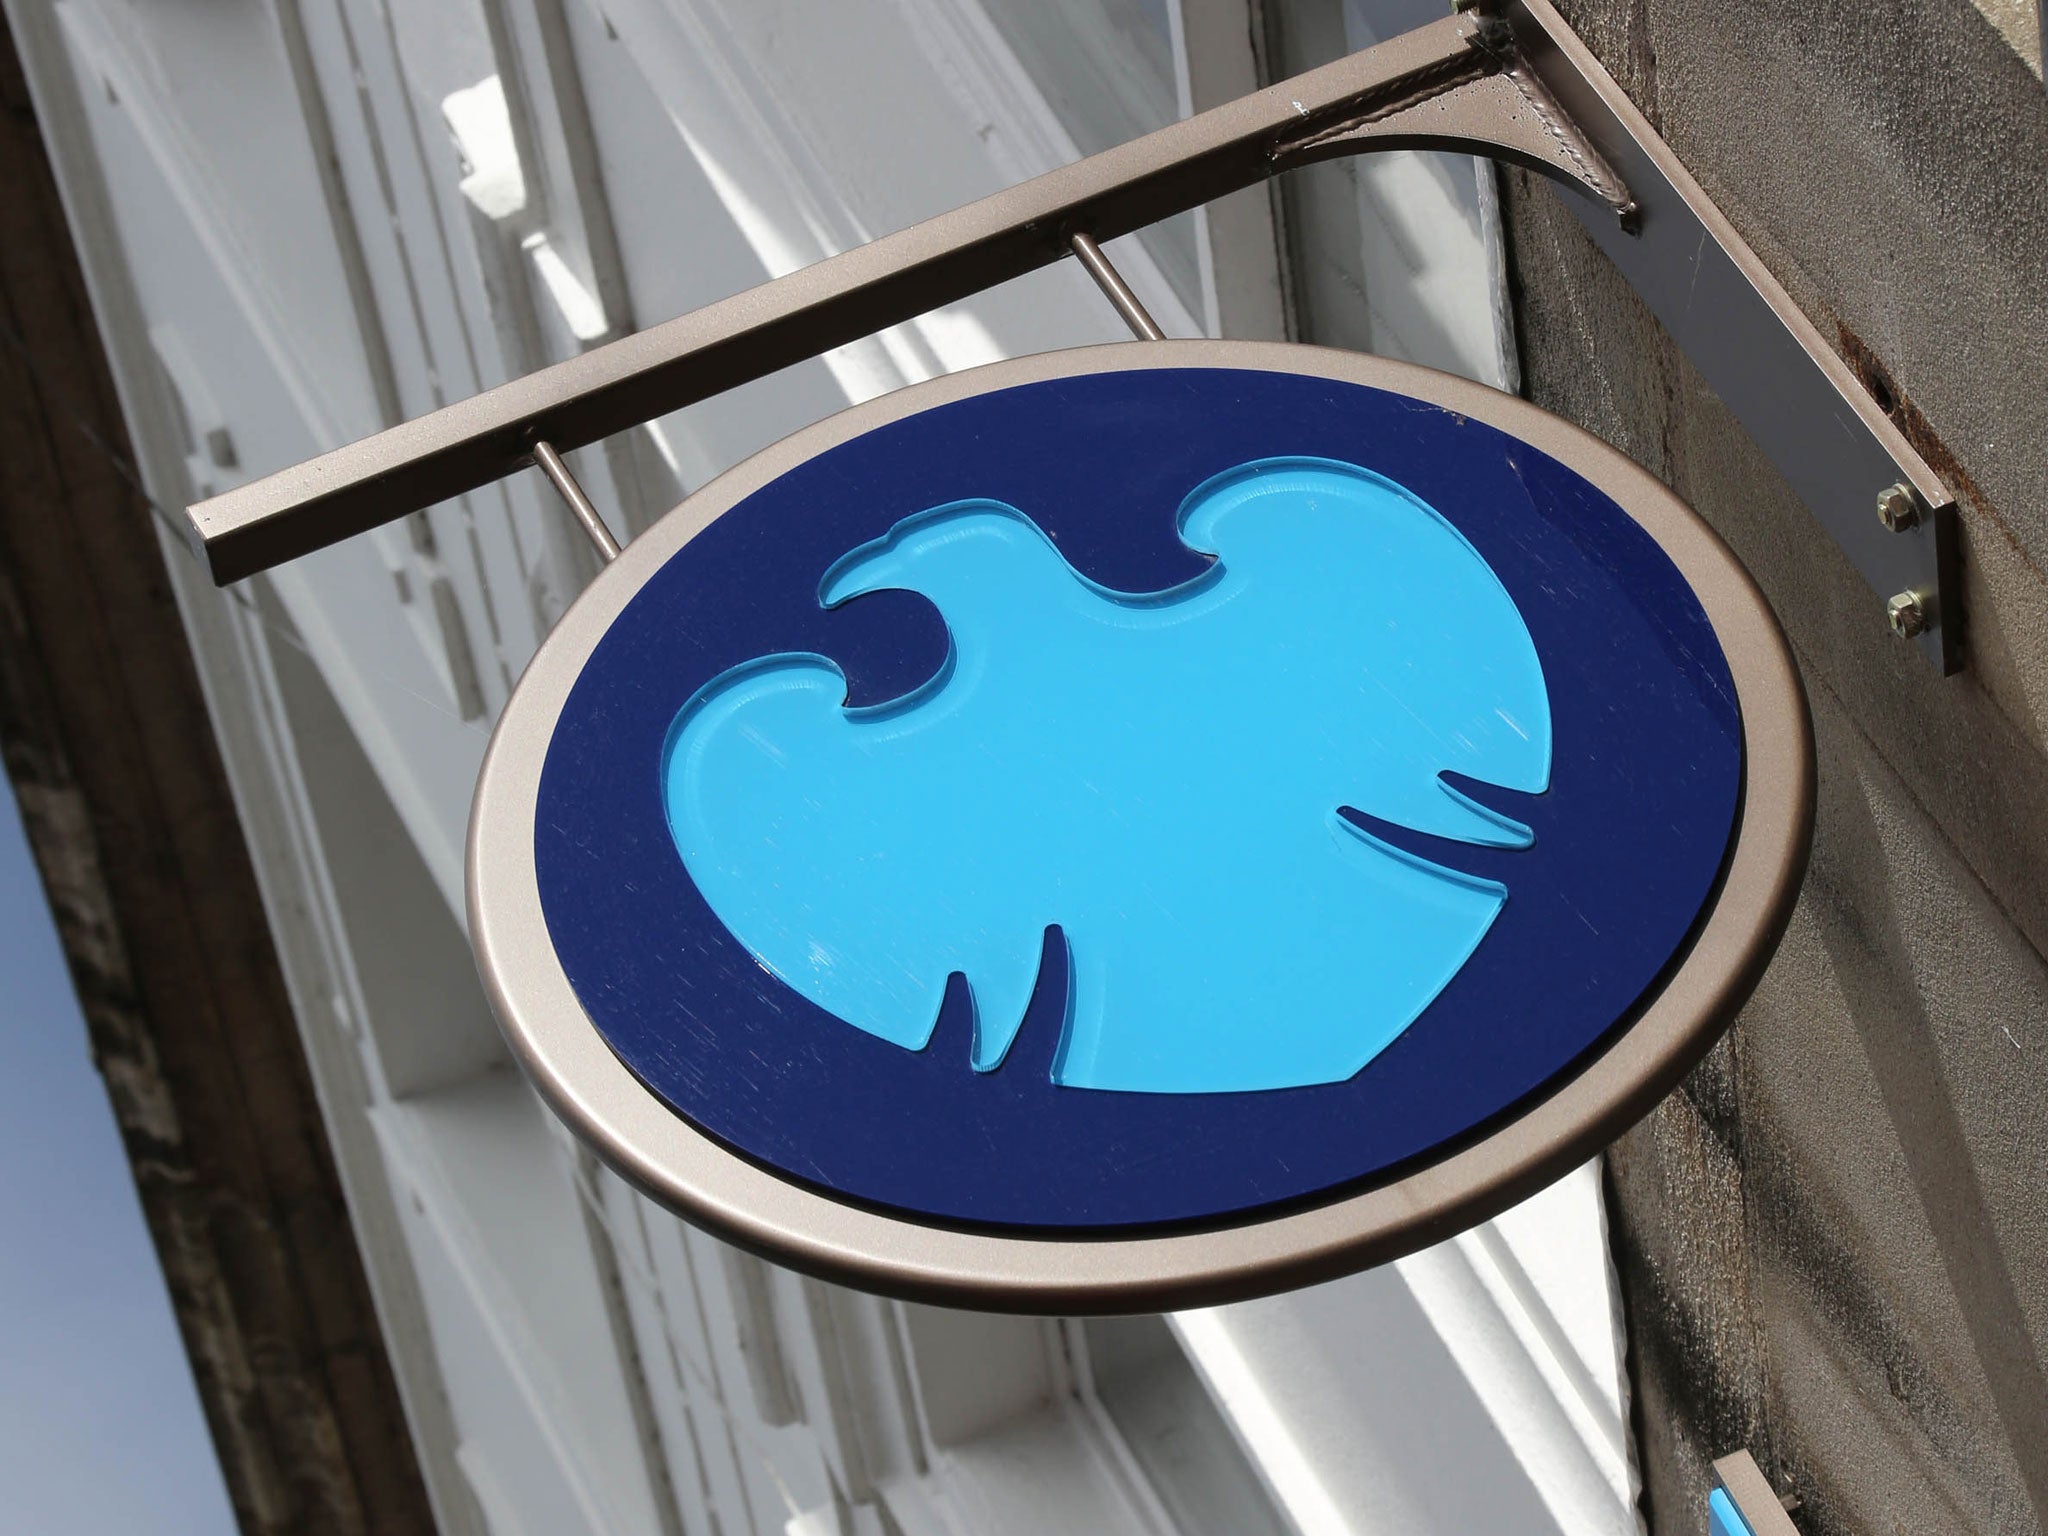 Barclays bonuses rose 10% to £2.38 billion last year